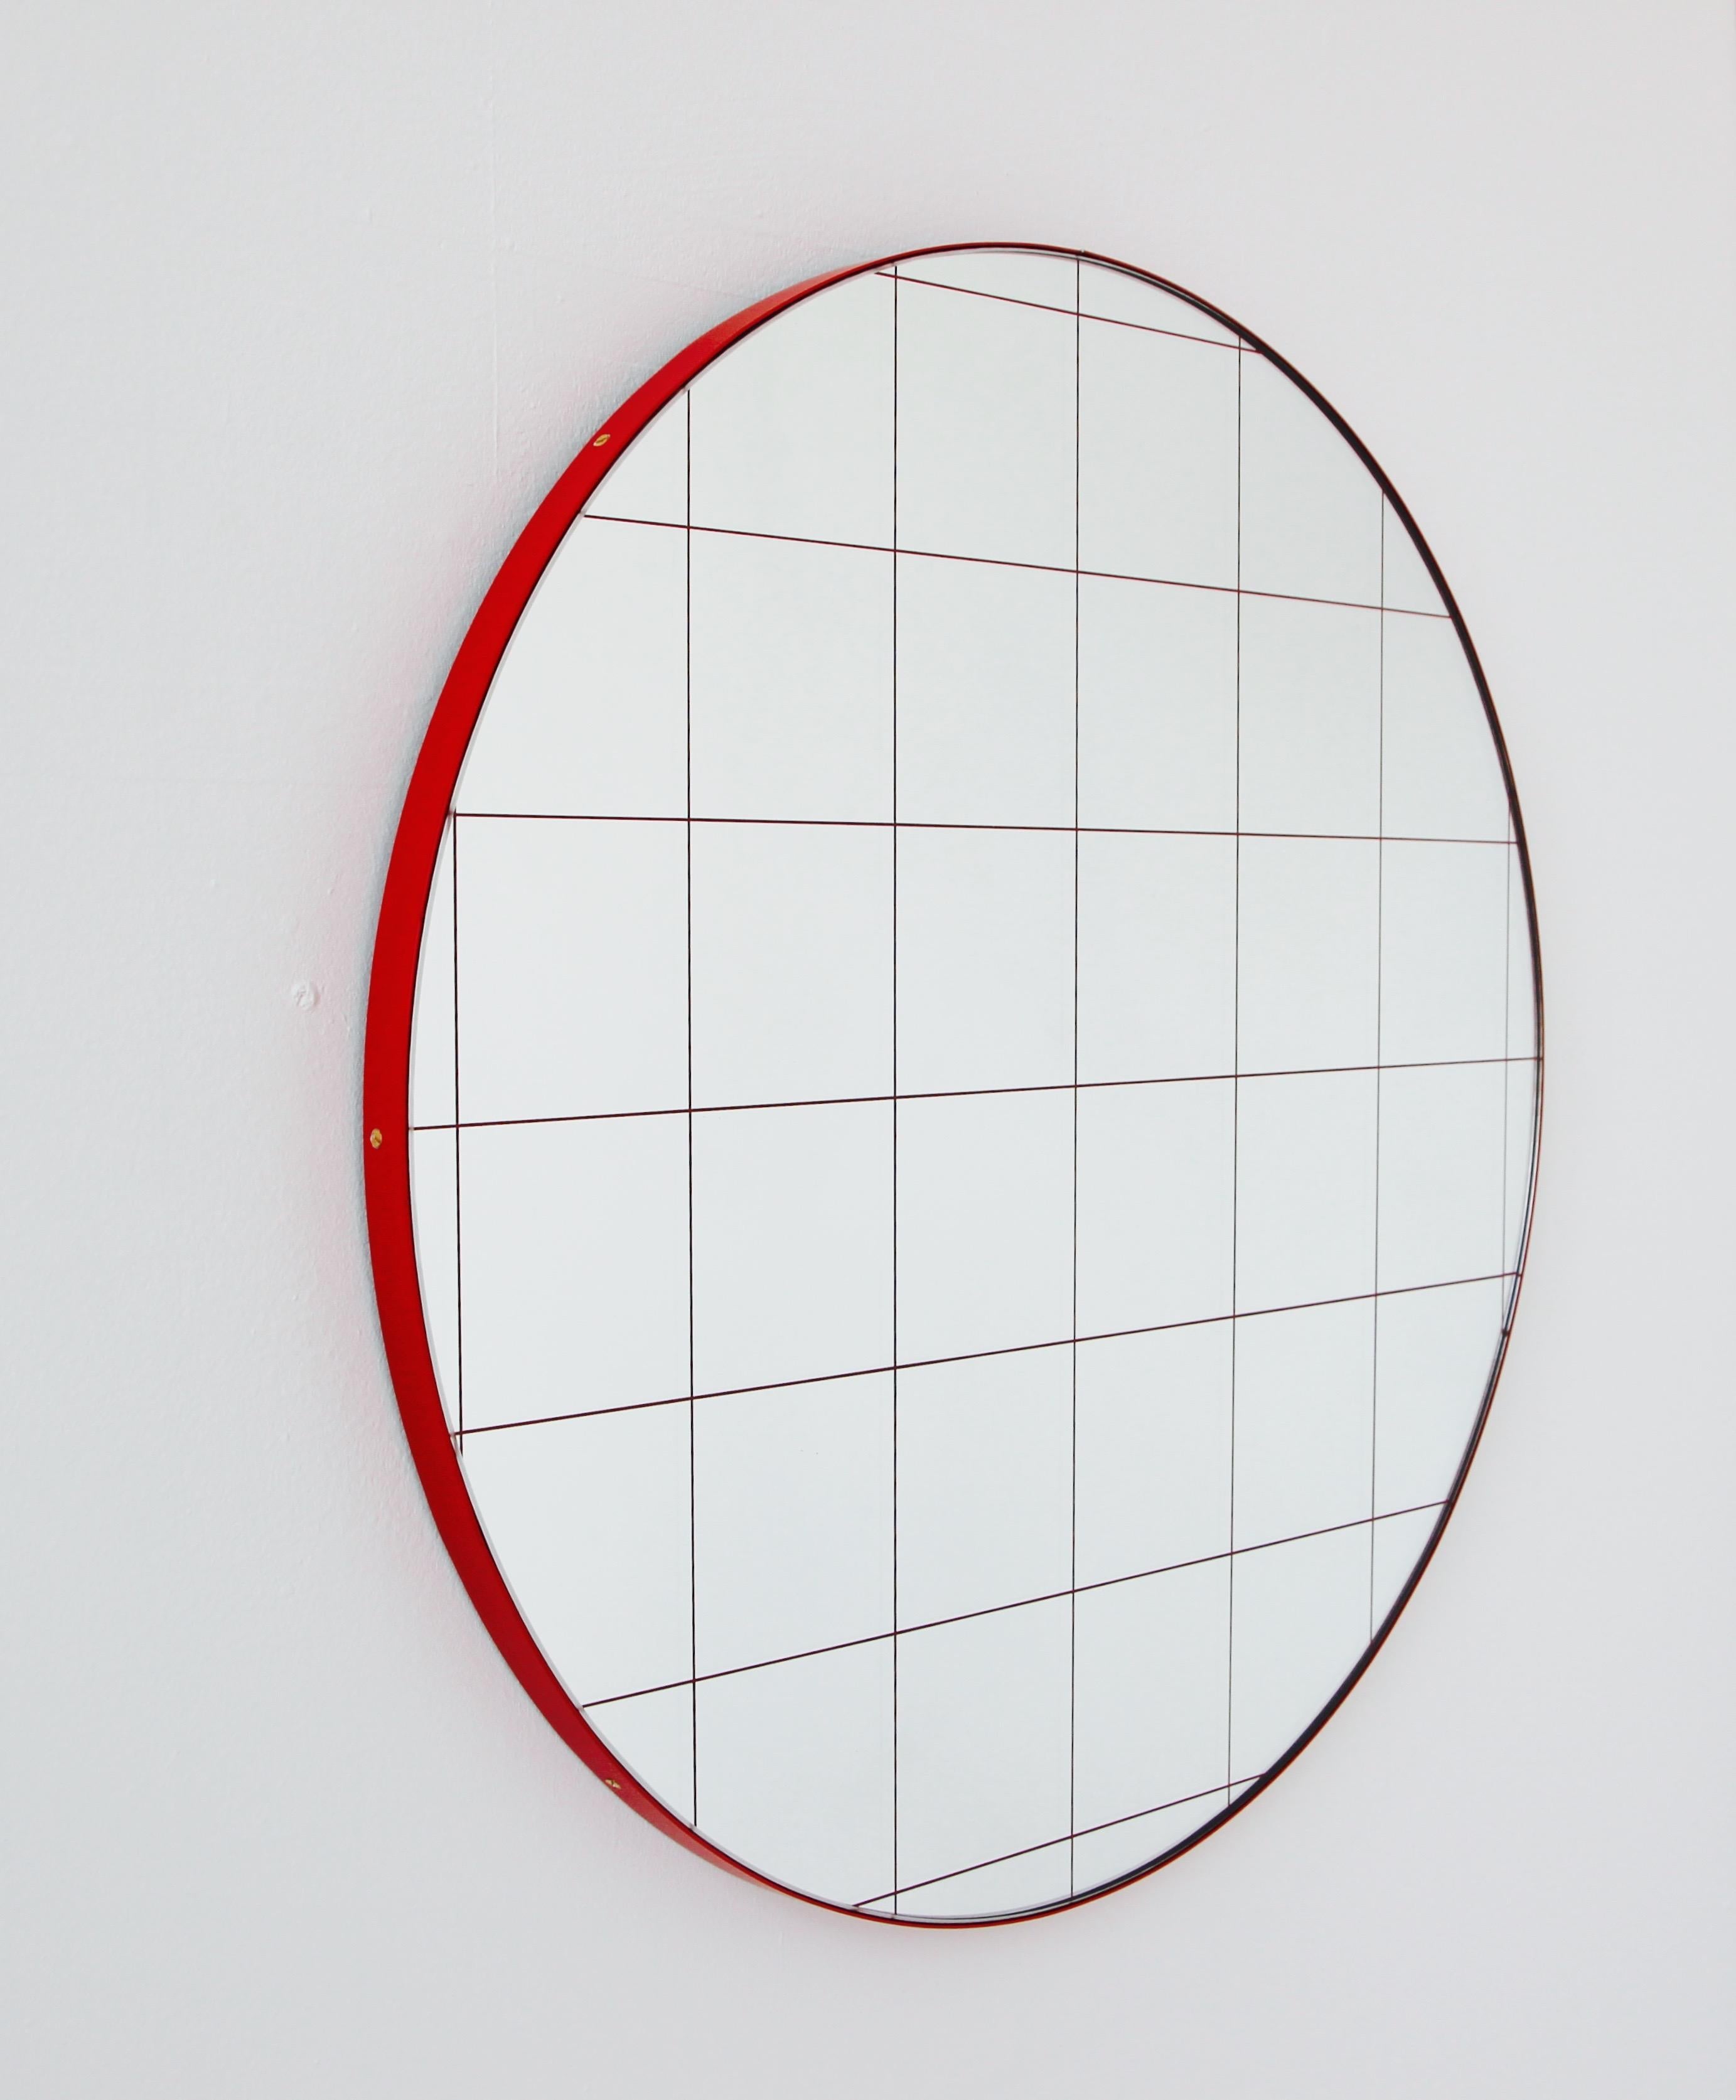 Organic Modern Orbis Red Grid Decorative Sandblasted Mirror with Modern Red Frame, Small